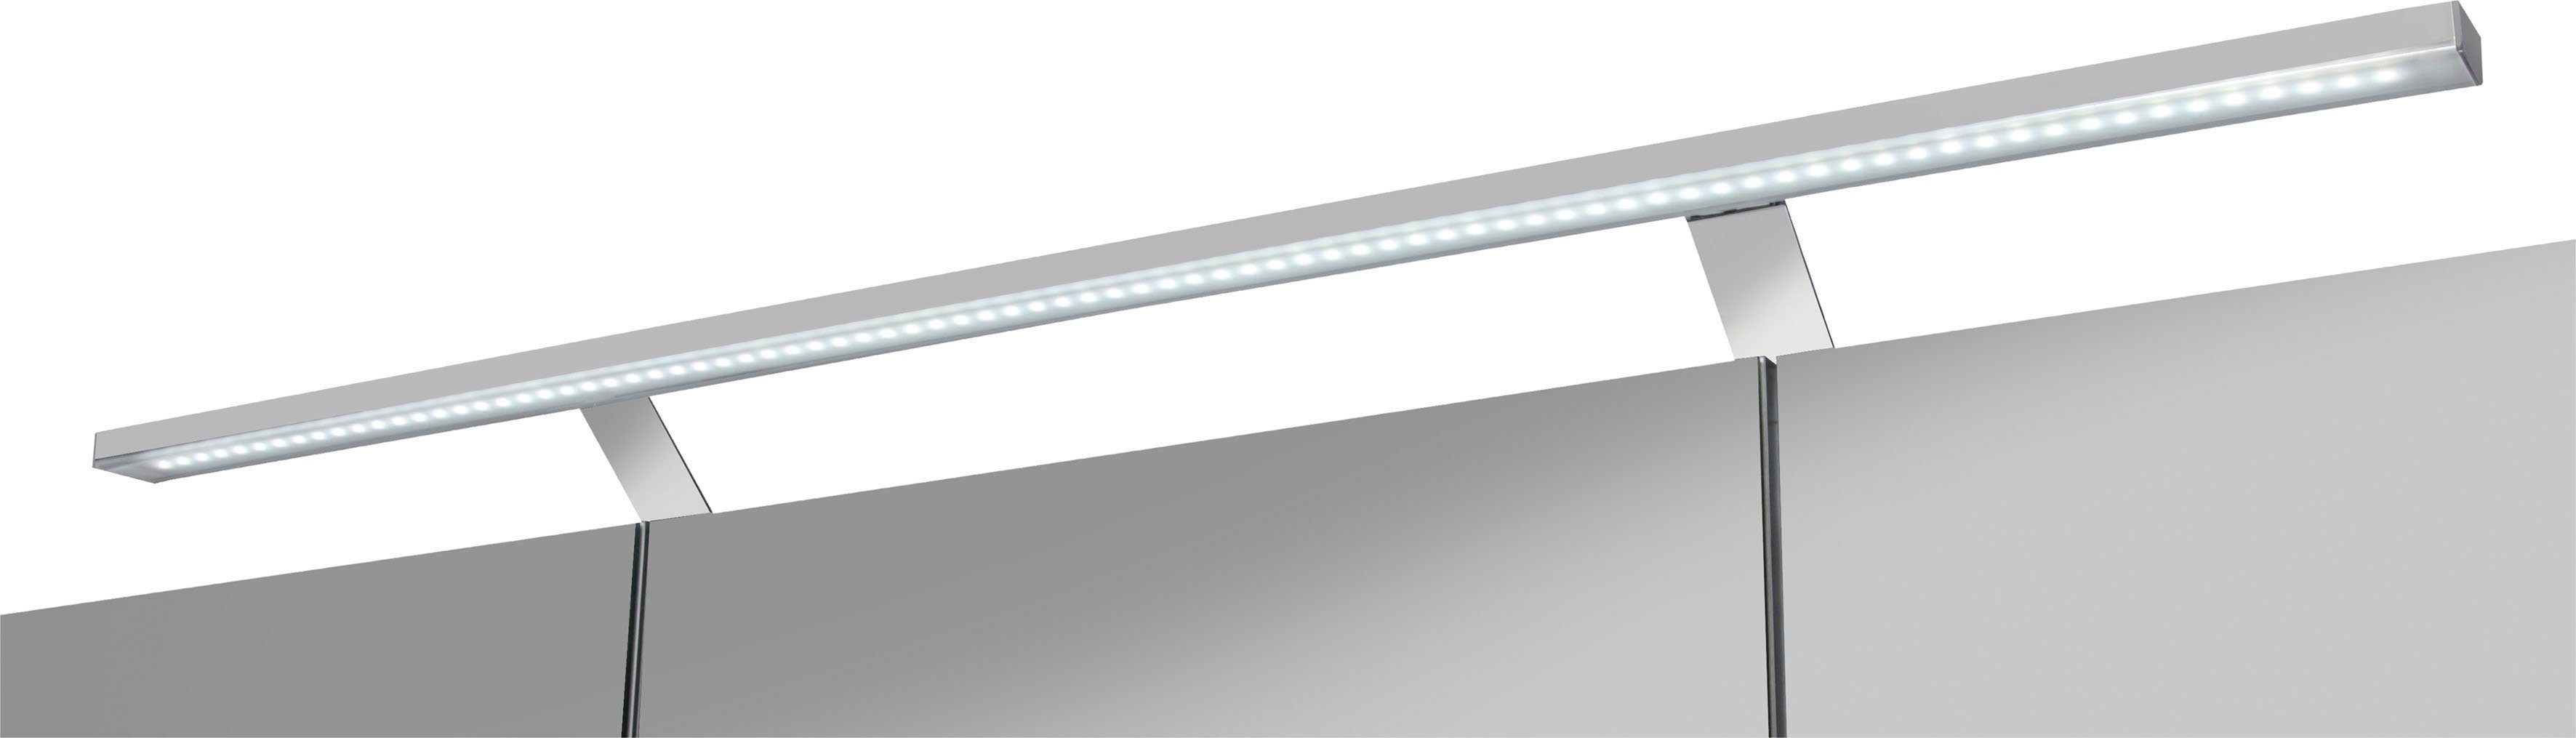 welltime Spiegelschrank Torino Breite Schalter-/Steckdosenbox cm, | basaltgrau basaltgrau 120 3-türig, LED-Beleuchtung